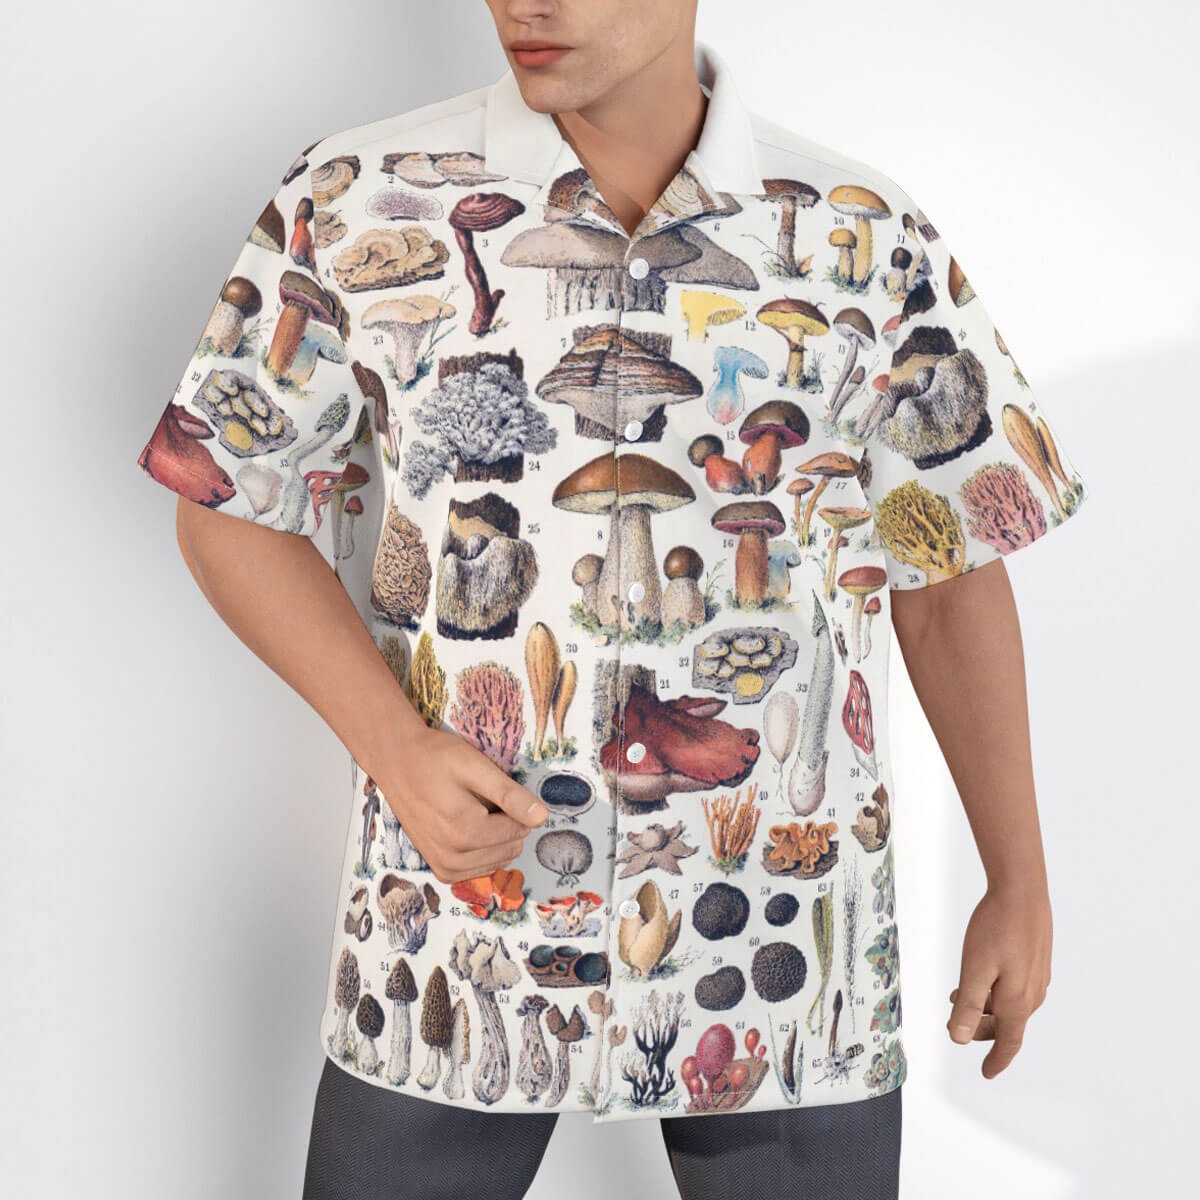 Back view of Mushroom Types Hawaiian Shirt displaying full array of fungi species